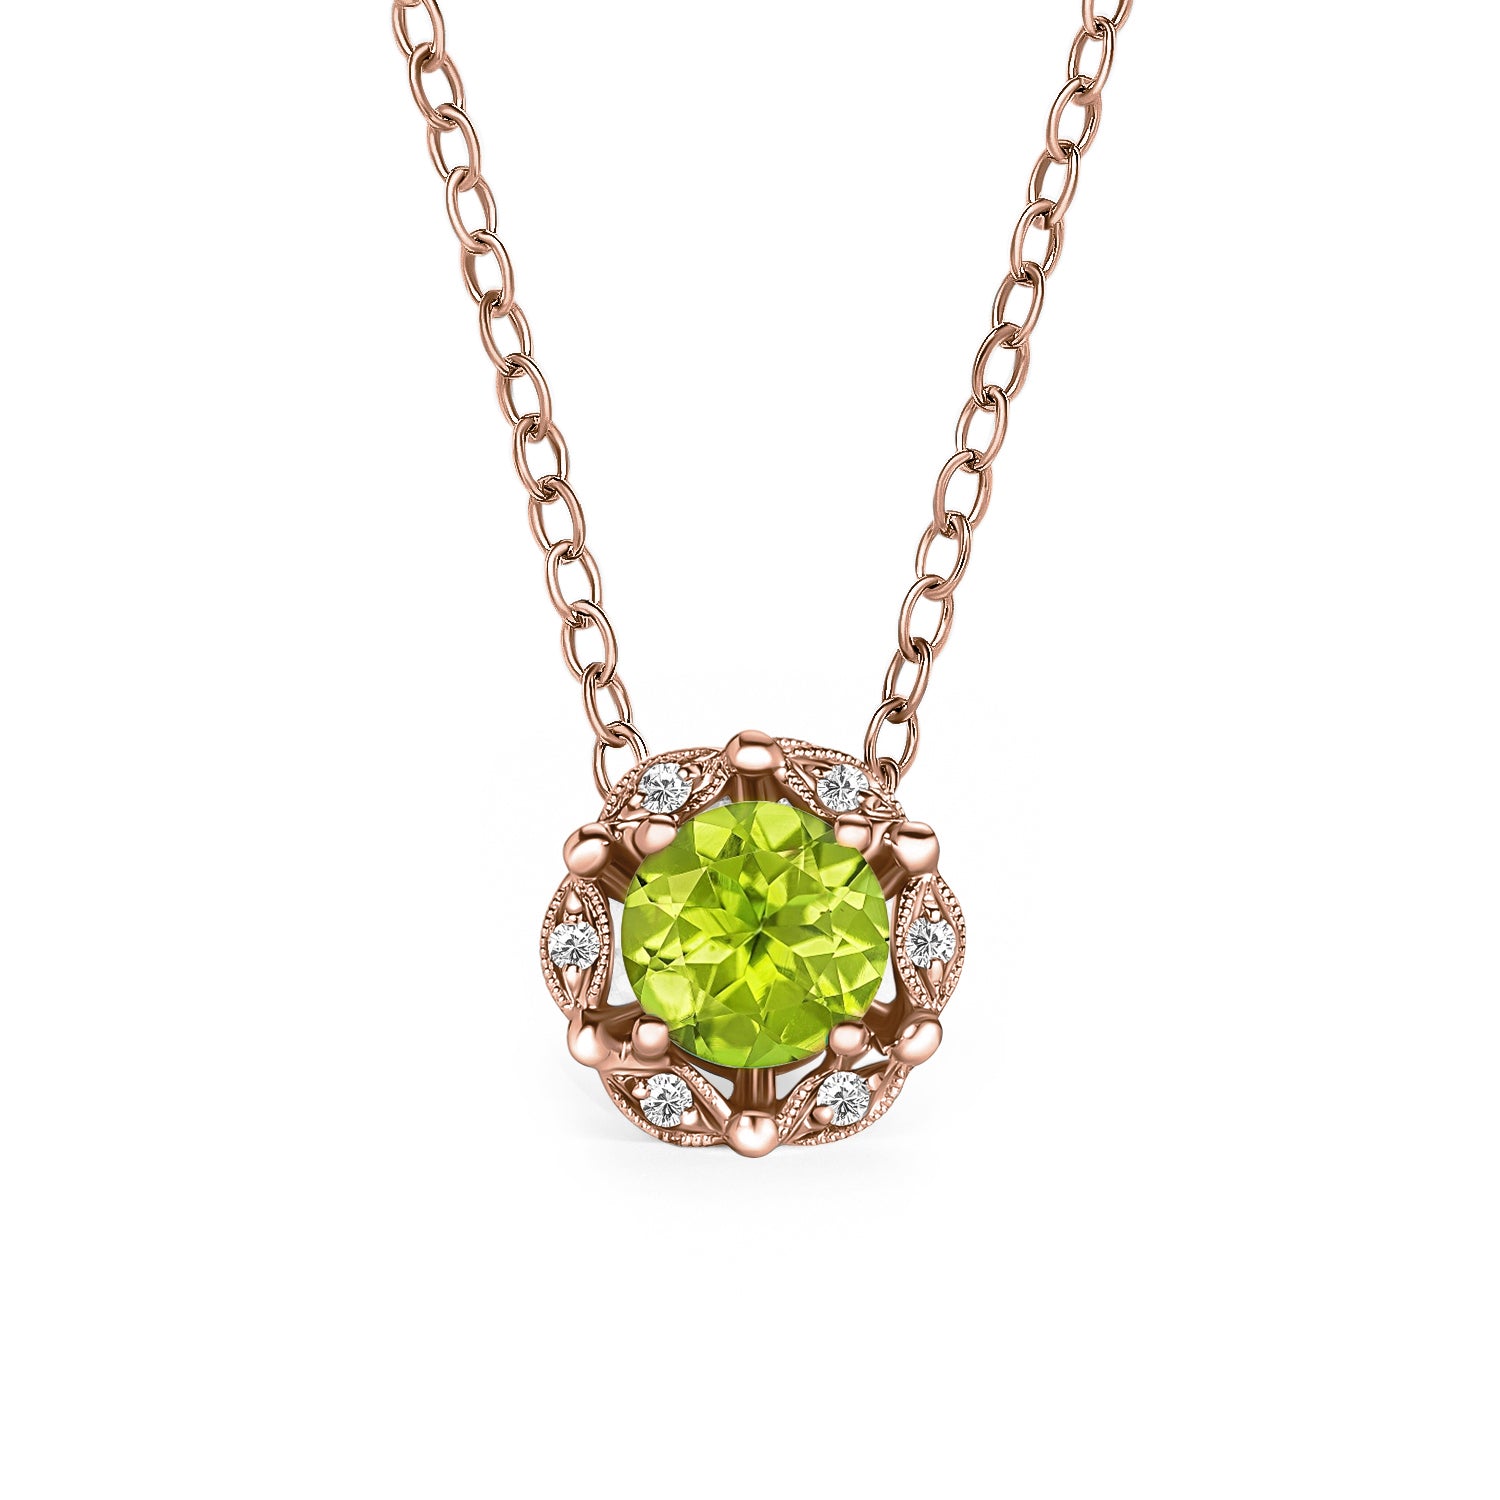 August Birthstone Peridot & Diamond Pendant Necklace - 14 Karat Yellow Gold  | eBay